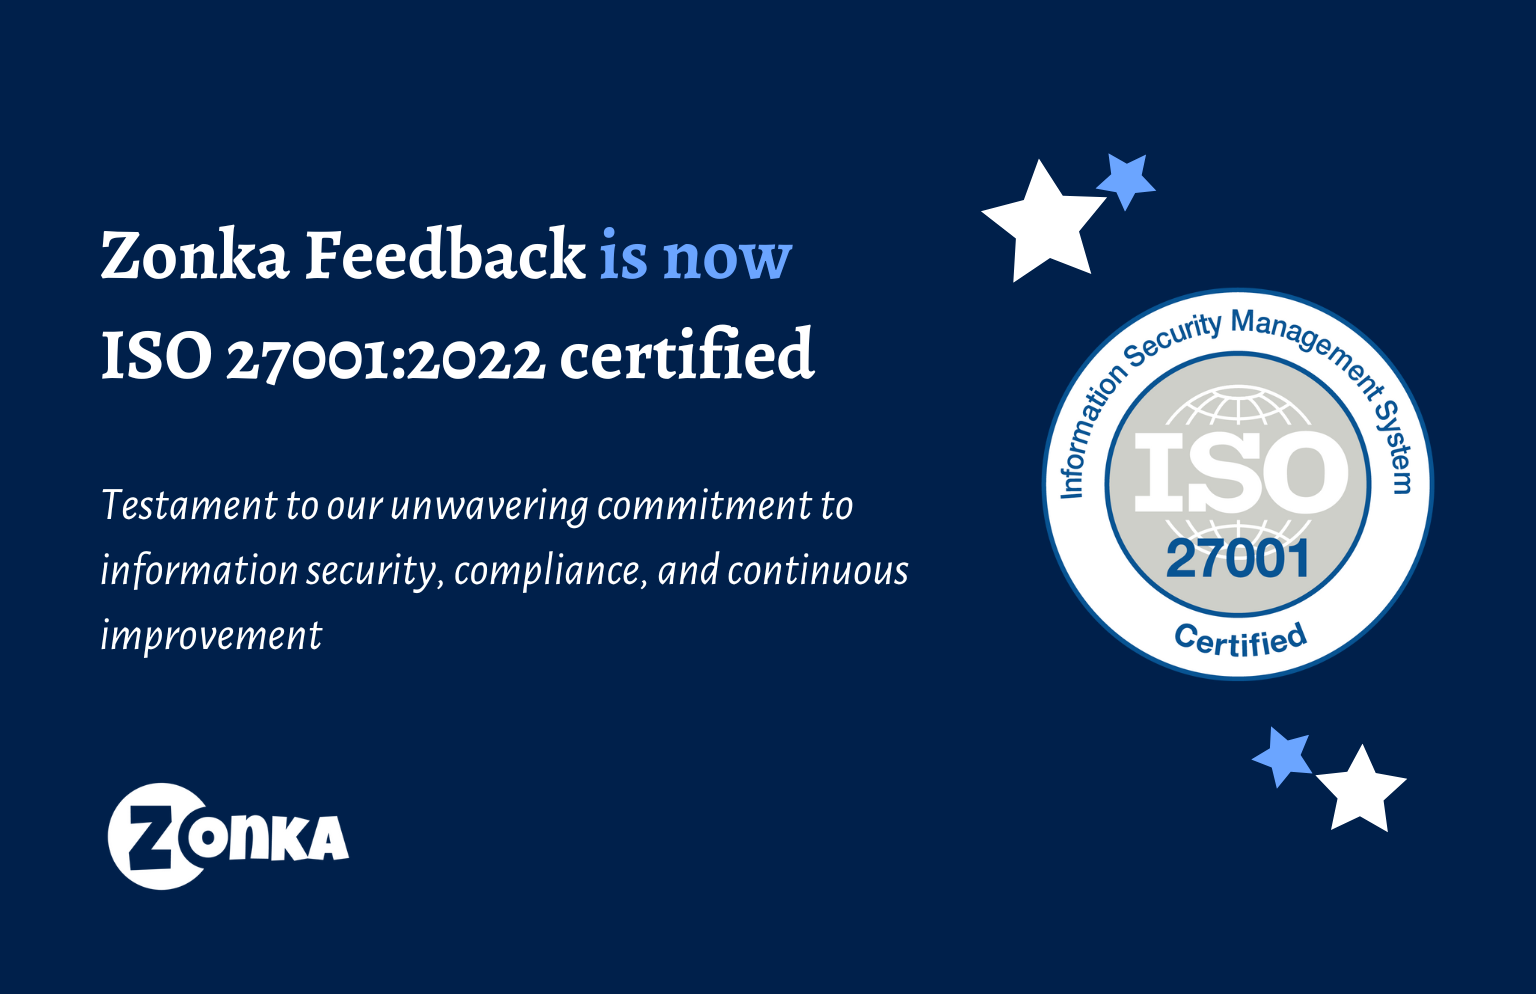 Zonka Feedback is now ISO certified